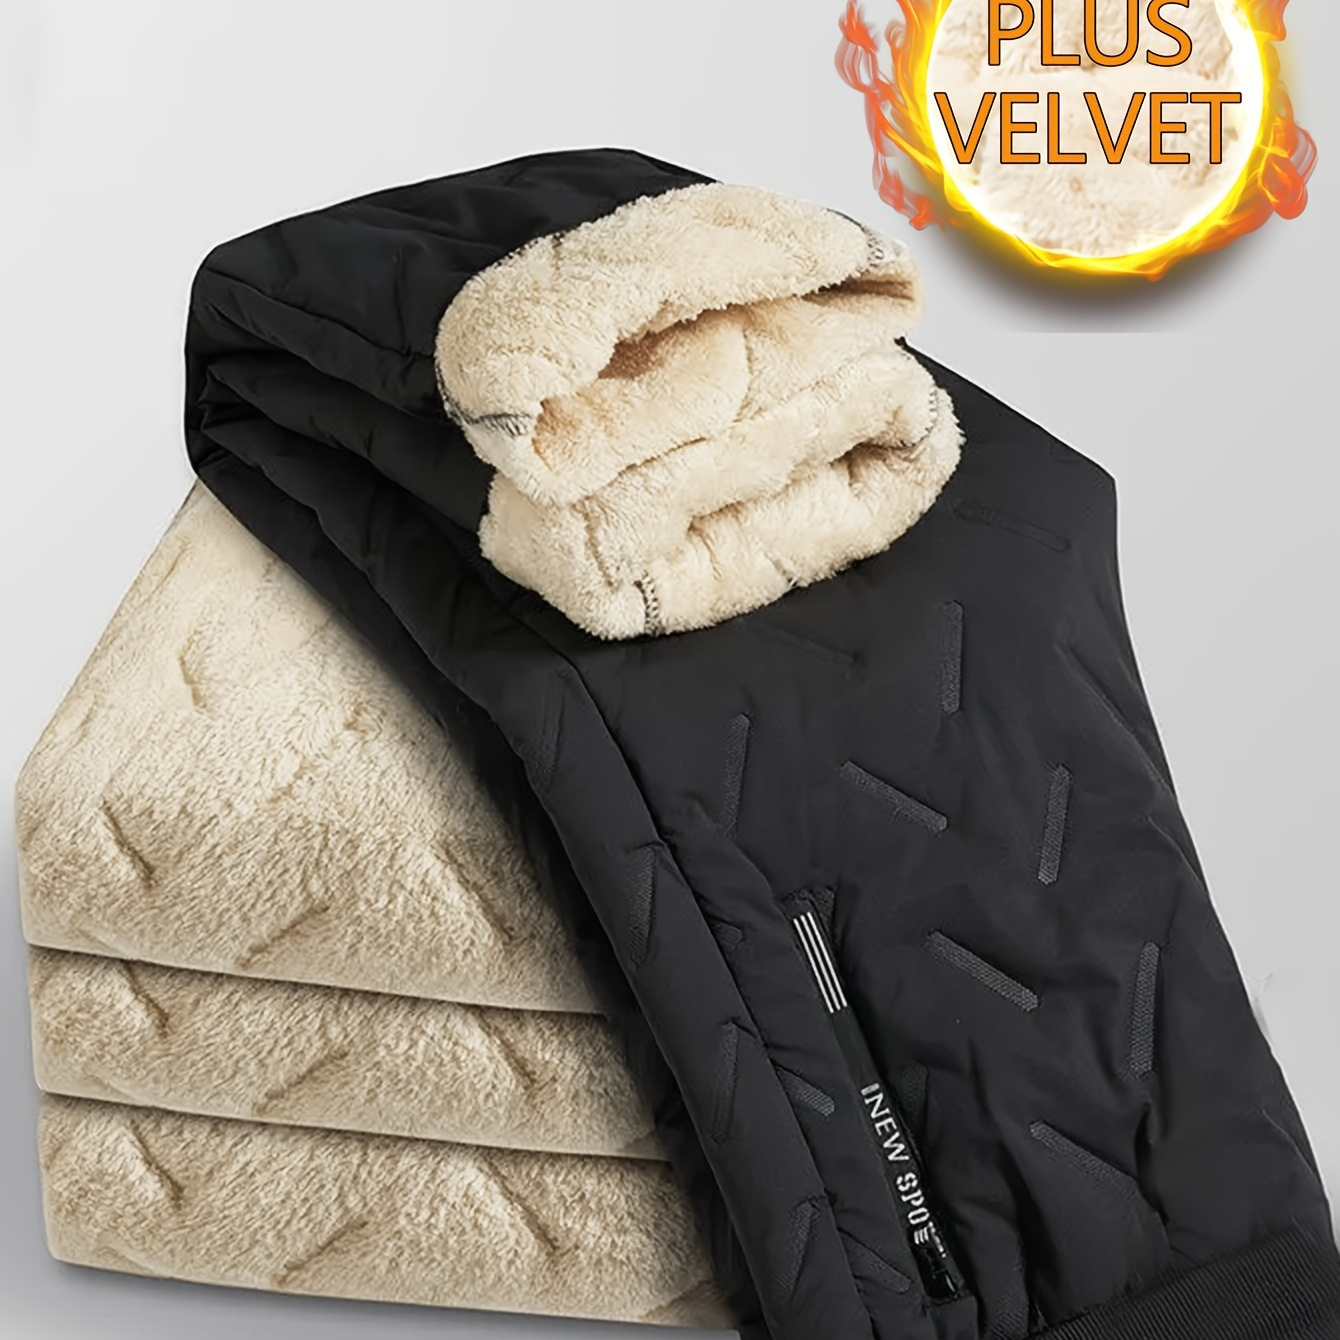 

Warm Fleece Thick Joggers, Men's Casual Waist Drawstring Zipper Pockets Sweatpants For Fall Winter Outdoor Activities